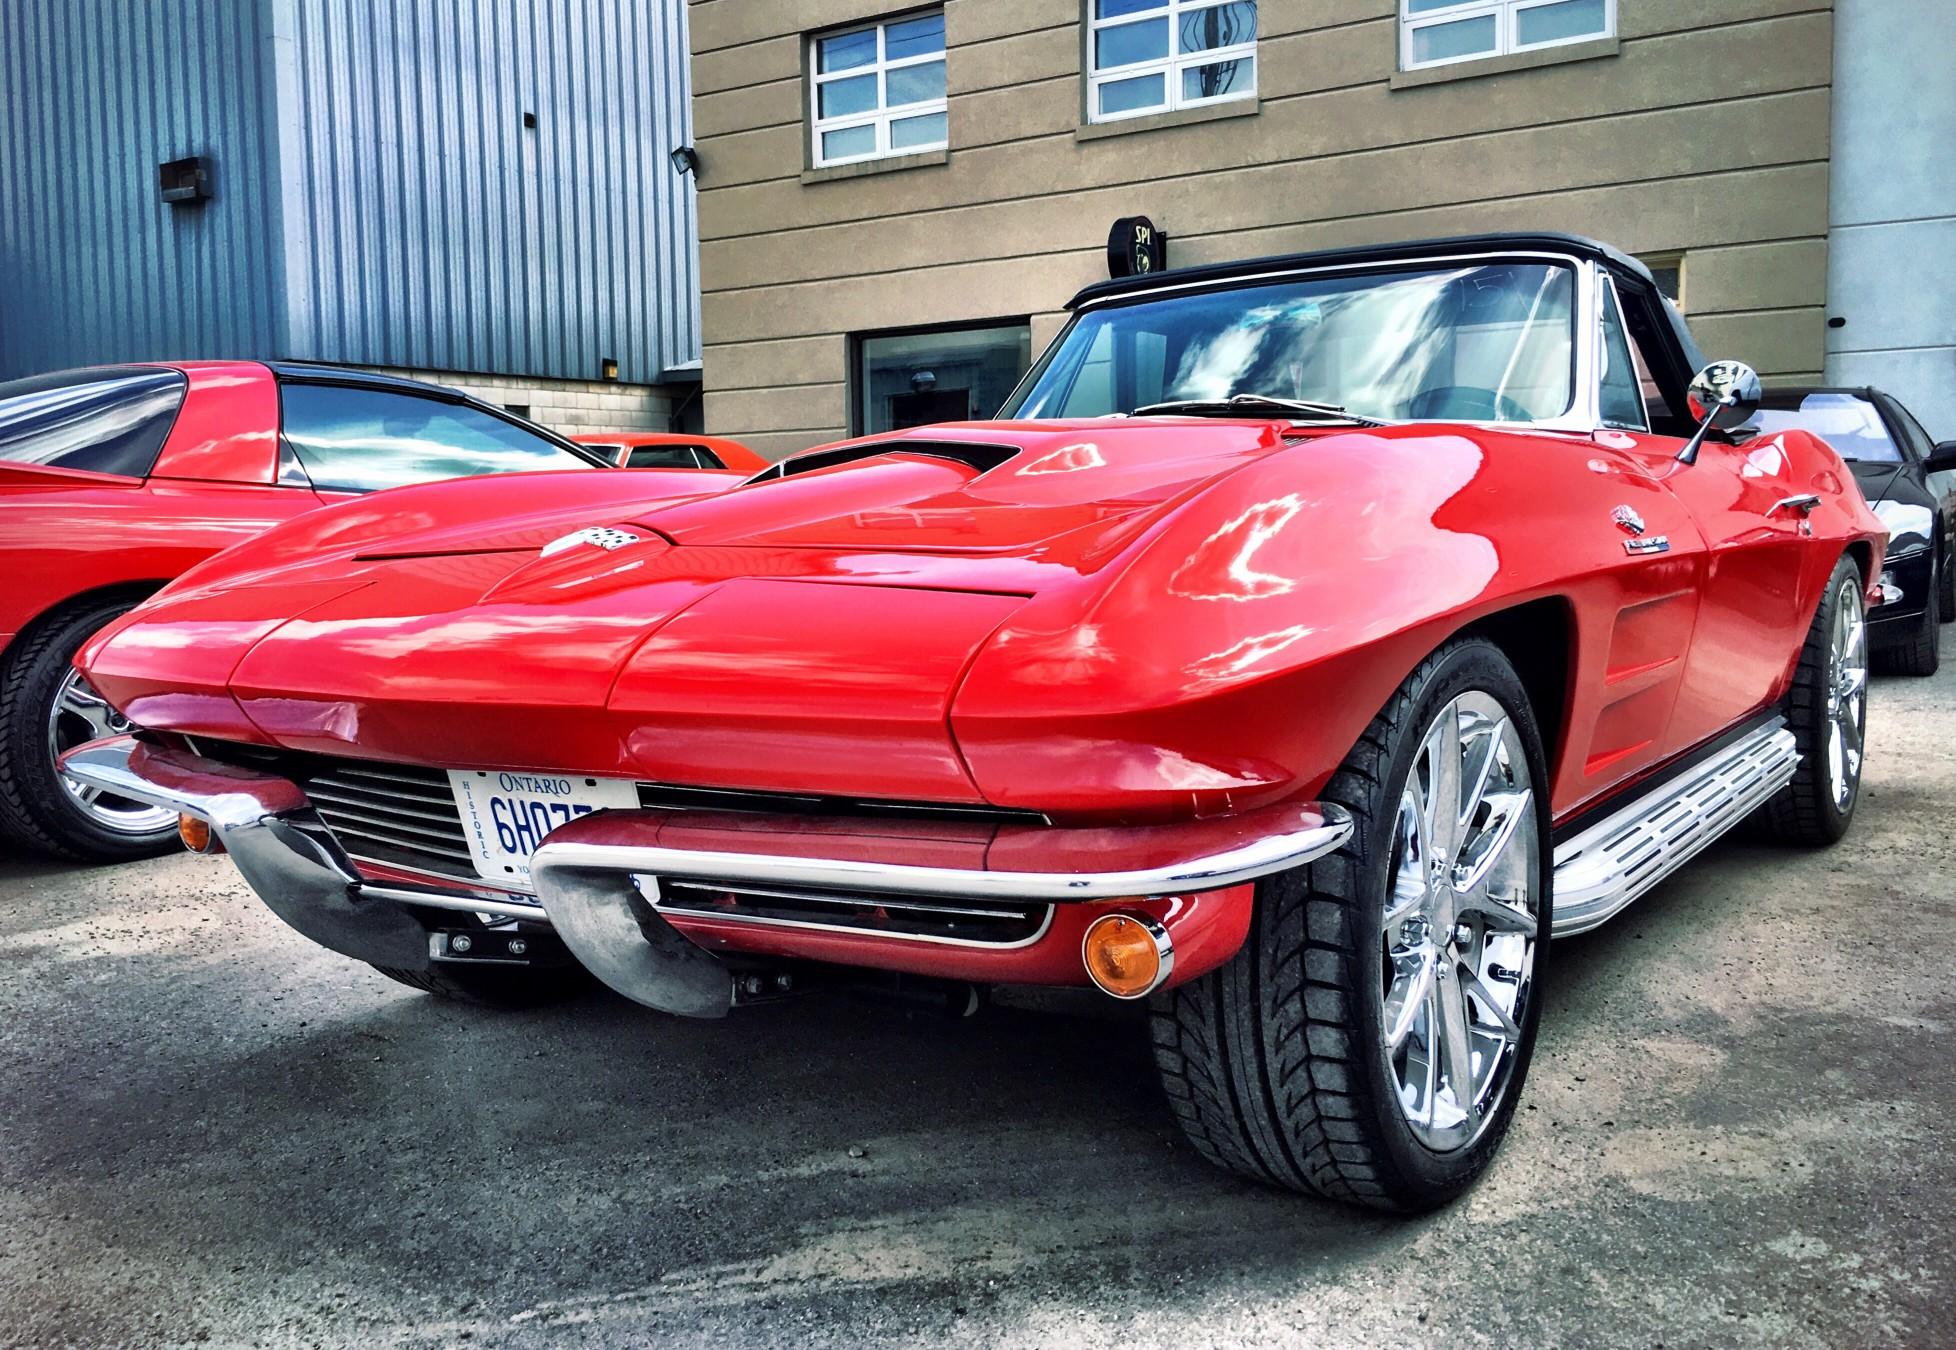 Classic red '70s Corvette